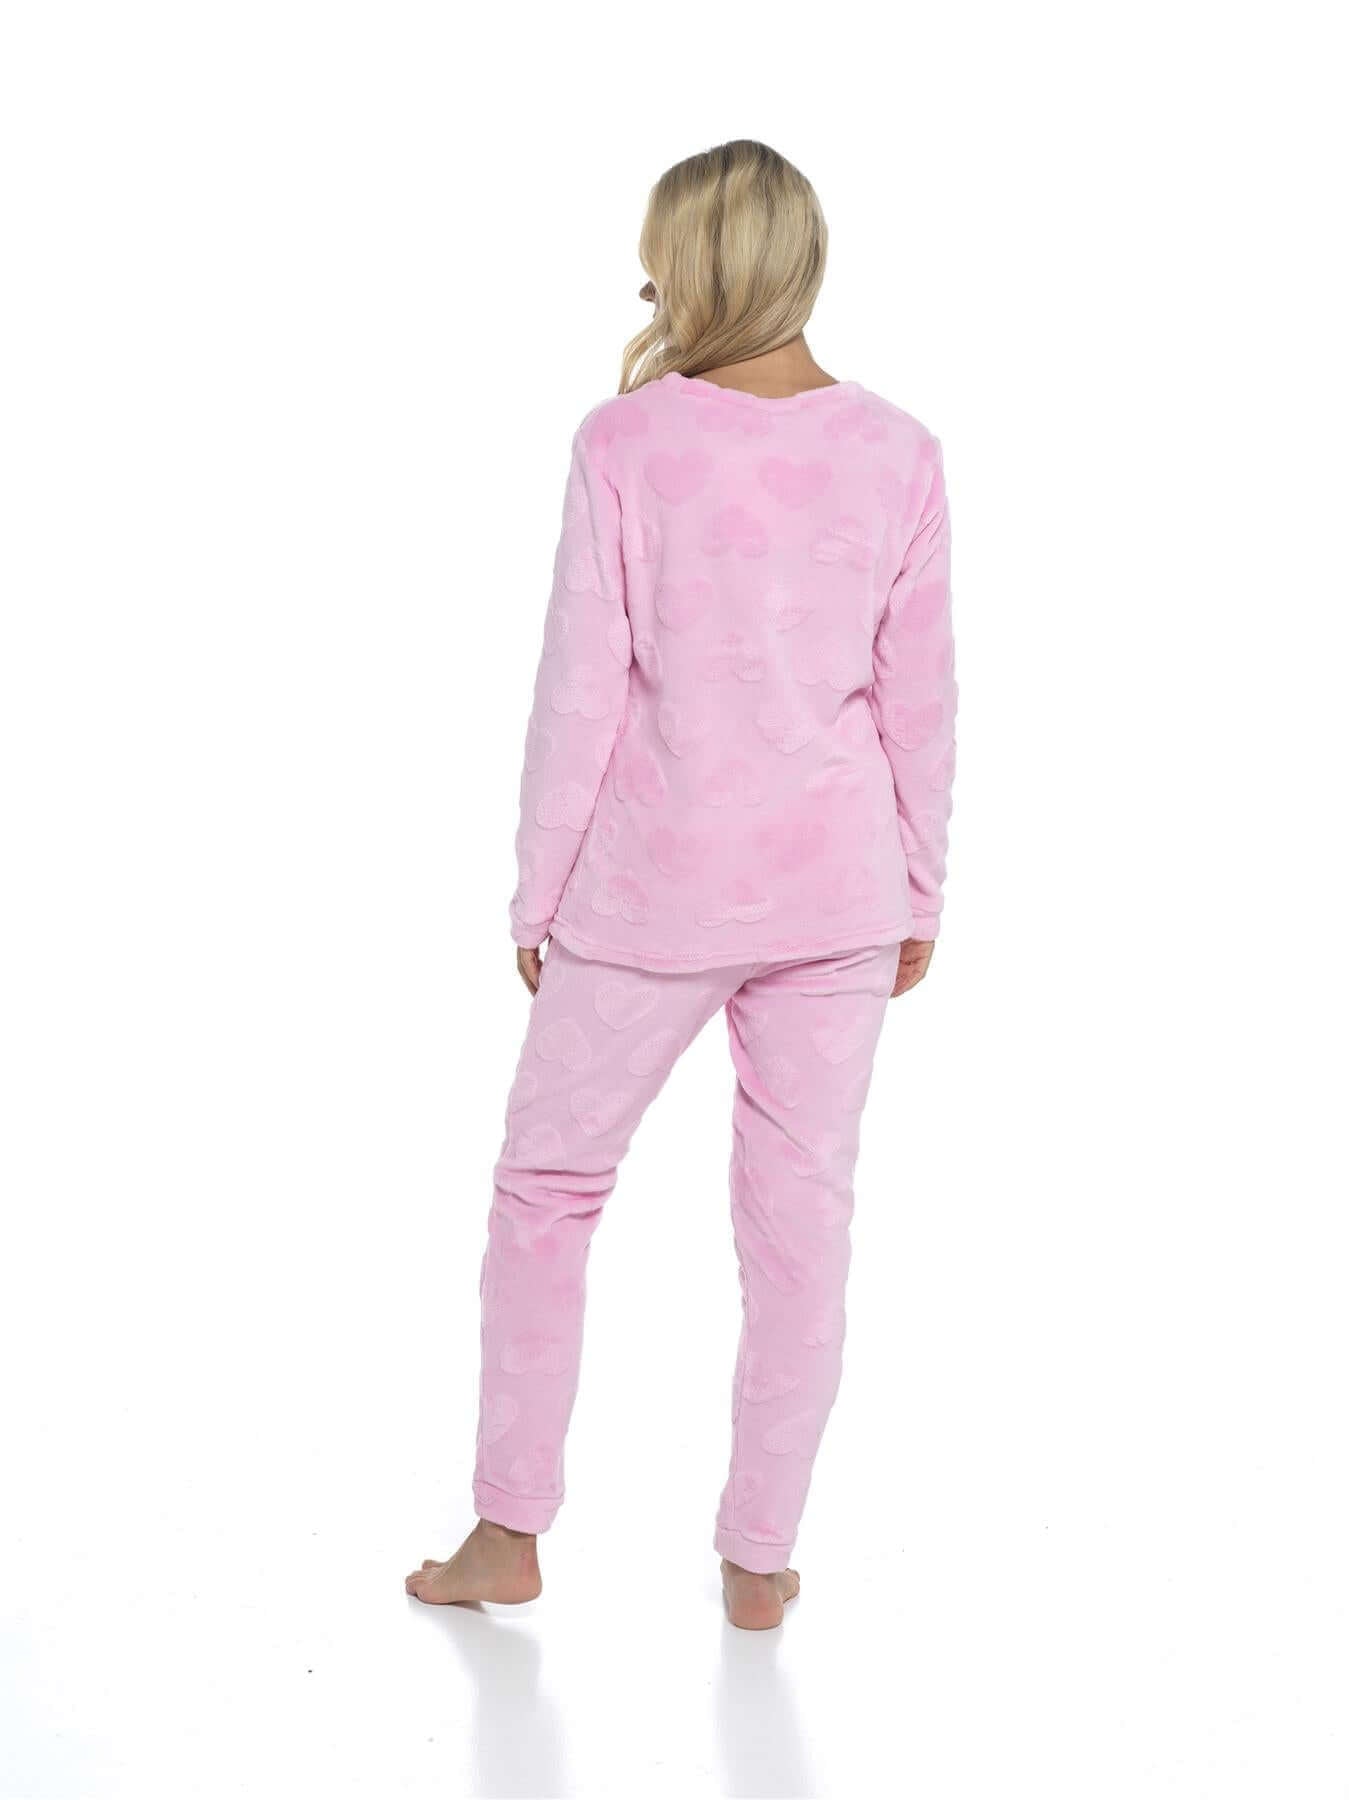 Women's Heart Fleece Pyjamas Super Soft Plush PJs, Top & Pants Loungewear Set. Buy now for £20.00. A Pyjamas by Daisy Dreamer. 12-14, 16-18, 20-22, 8-10, bath robe, bathrobe, beige, blush pink, bottom, brown, champagne, clothing, comfortable, cosy, dusky